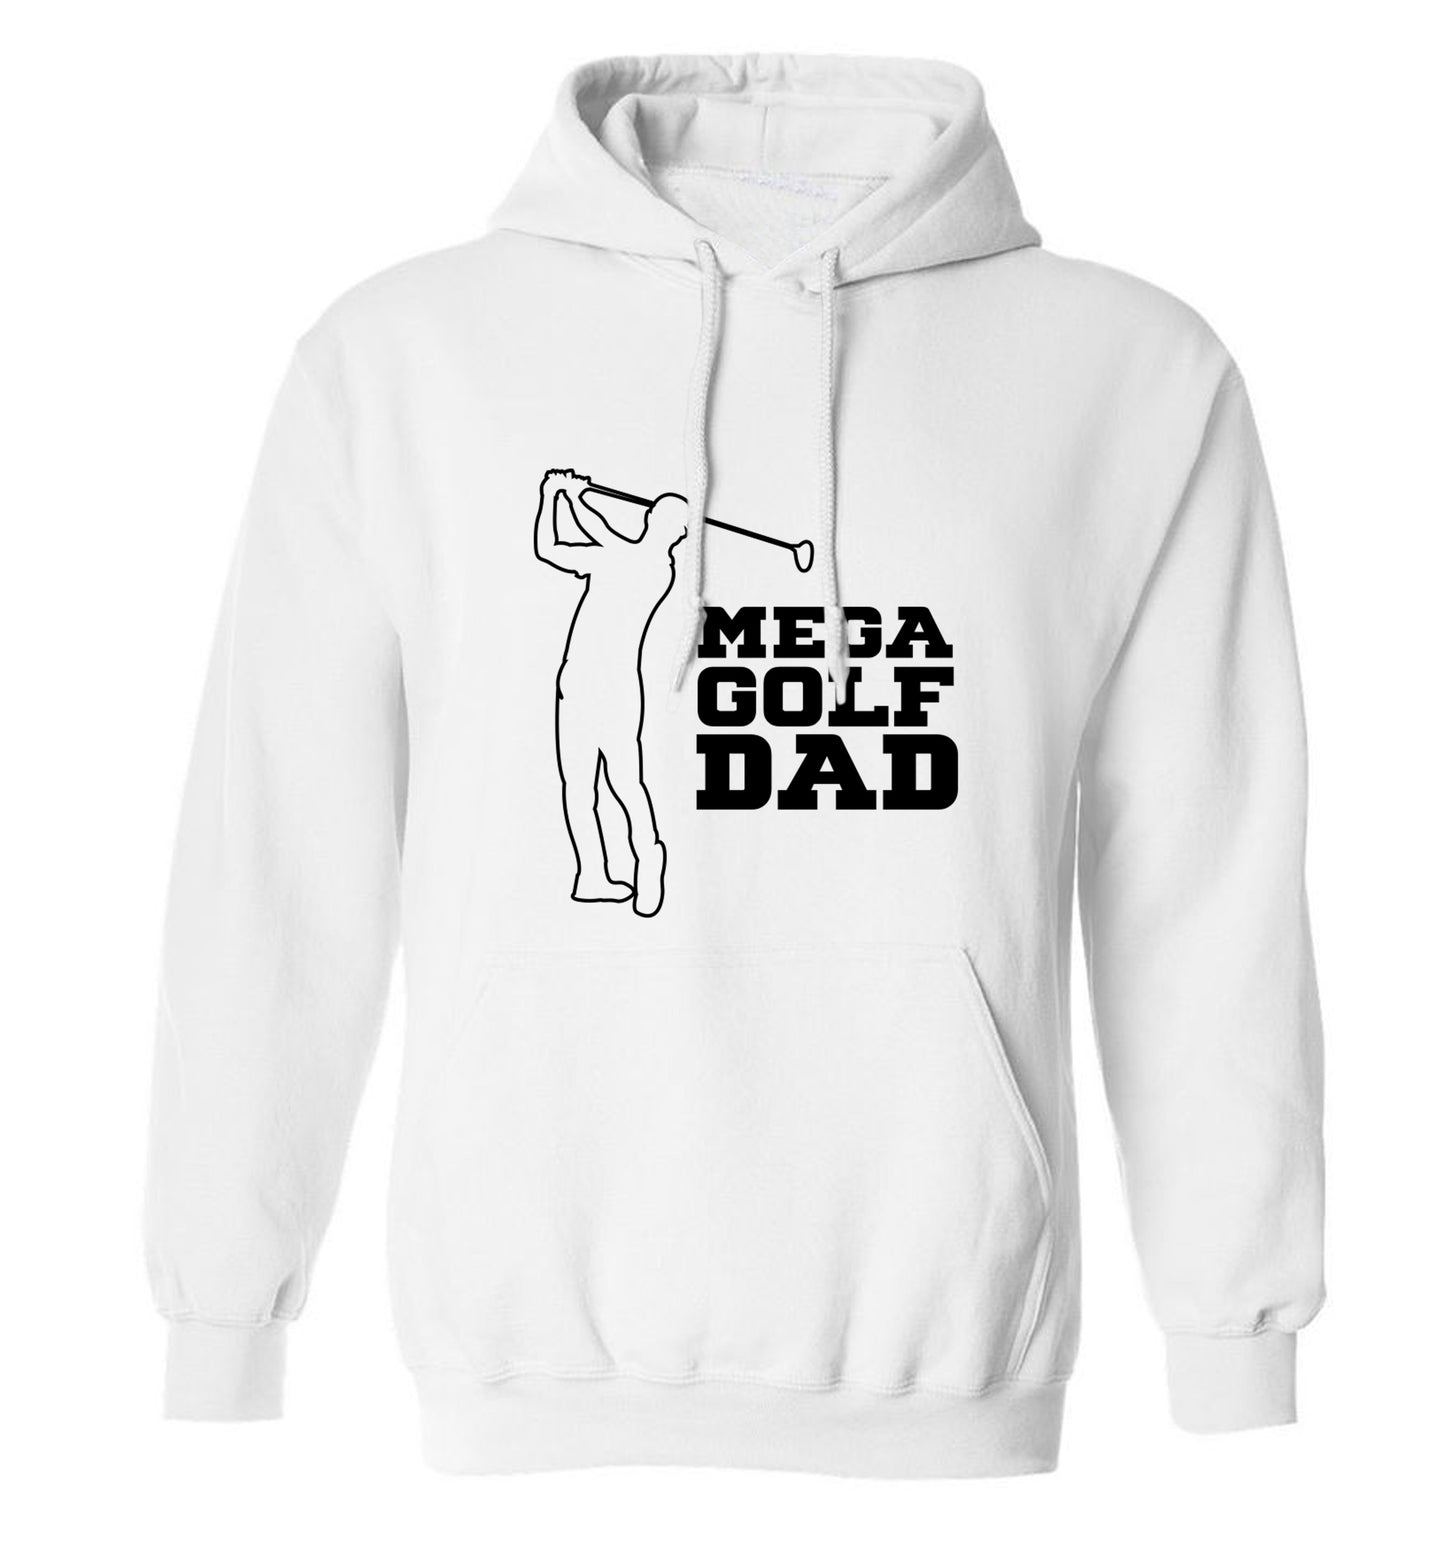 Mega golfing dad adults unisex white hoodie 2XL